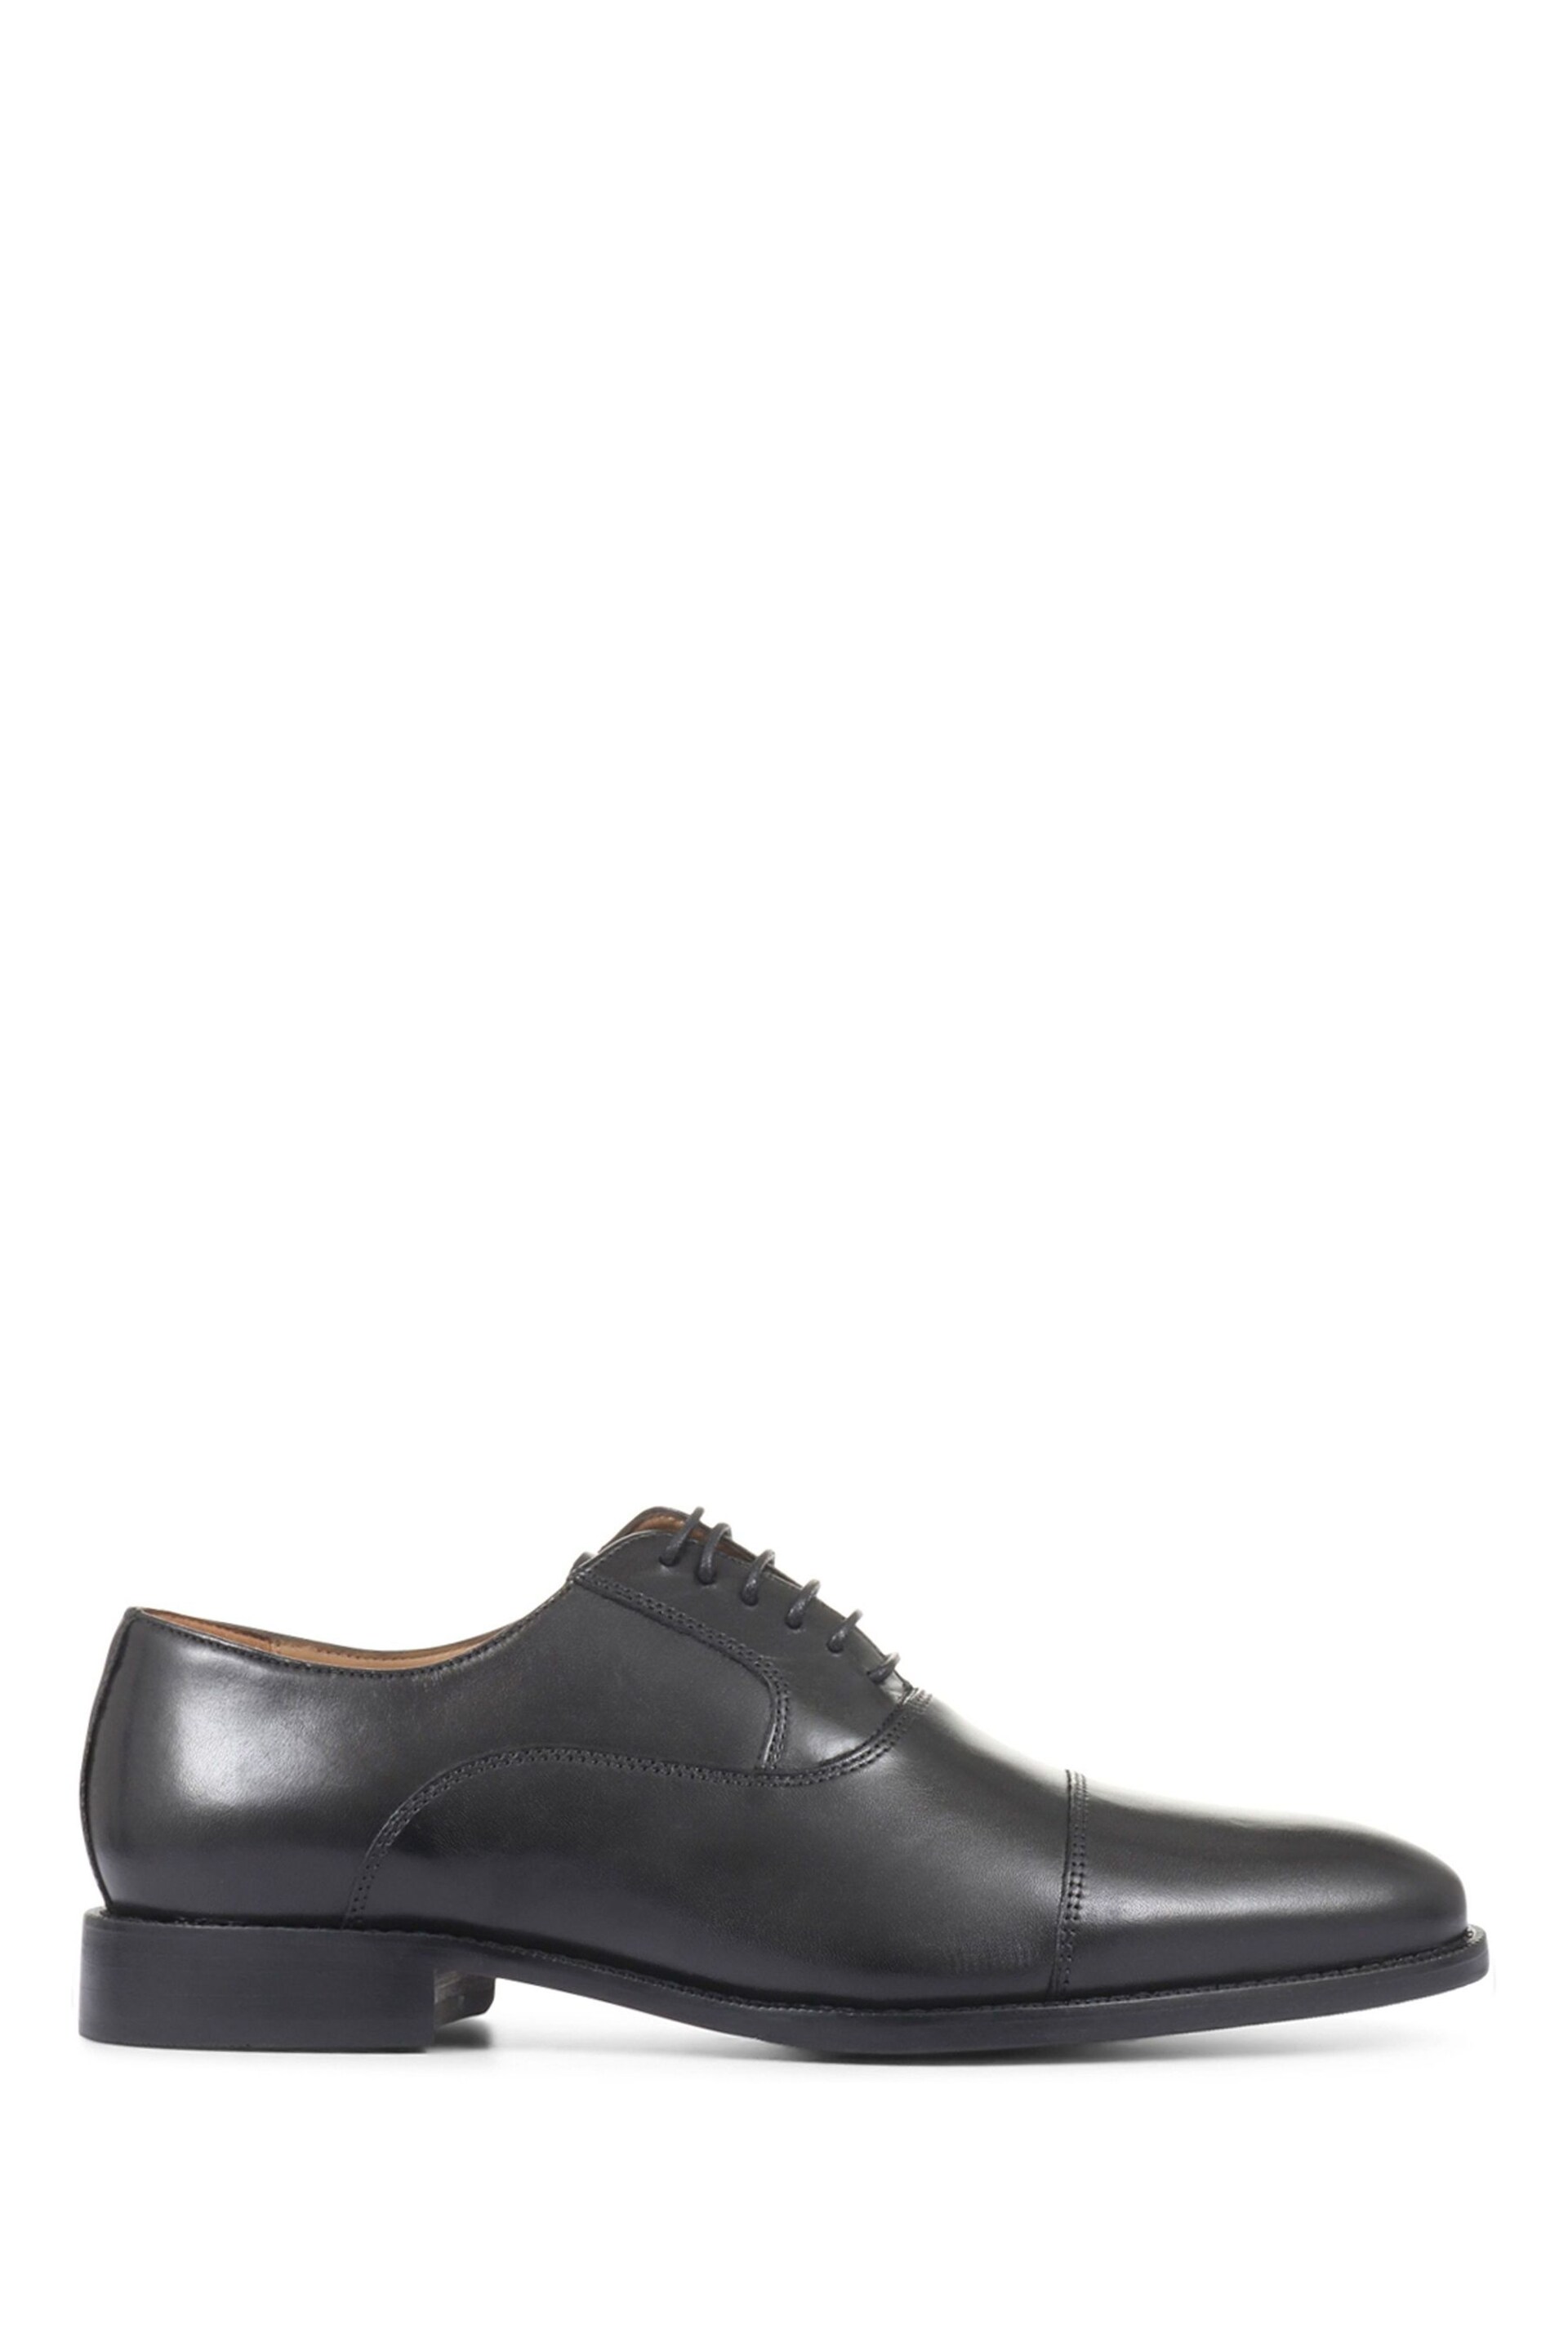 Jones Bootmaker Matthew Tan Leather Oxford Shoes - Image 2 of 6